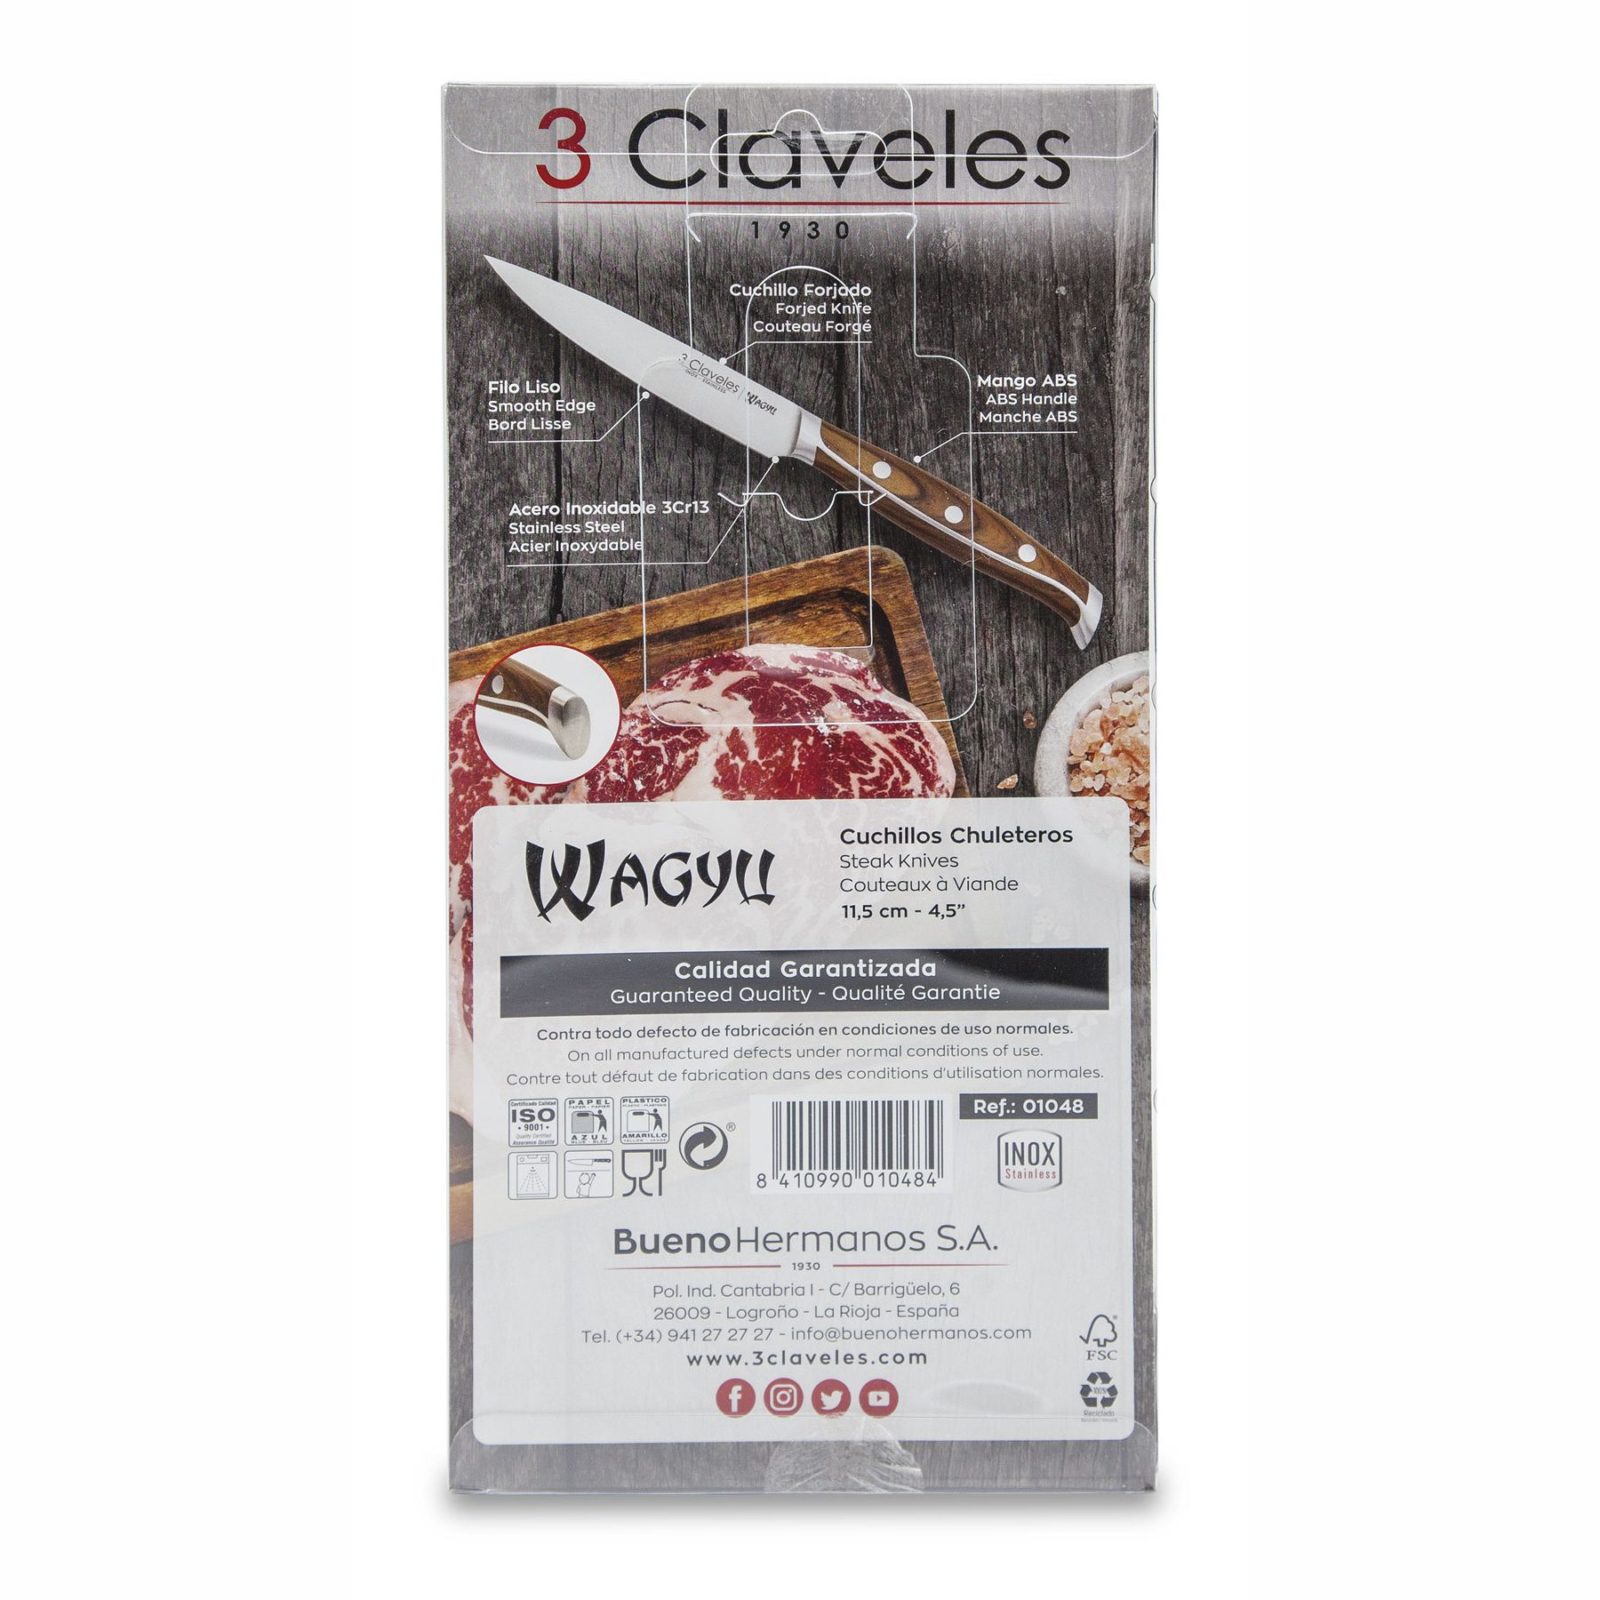 Cuchillos chuleteros 3 Claveles Wagyu de filo liso